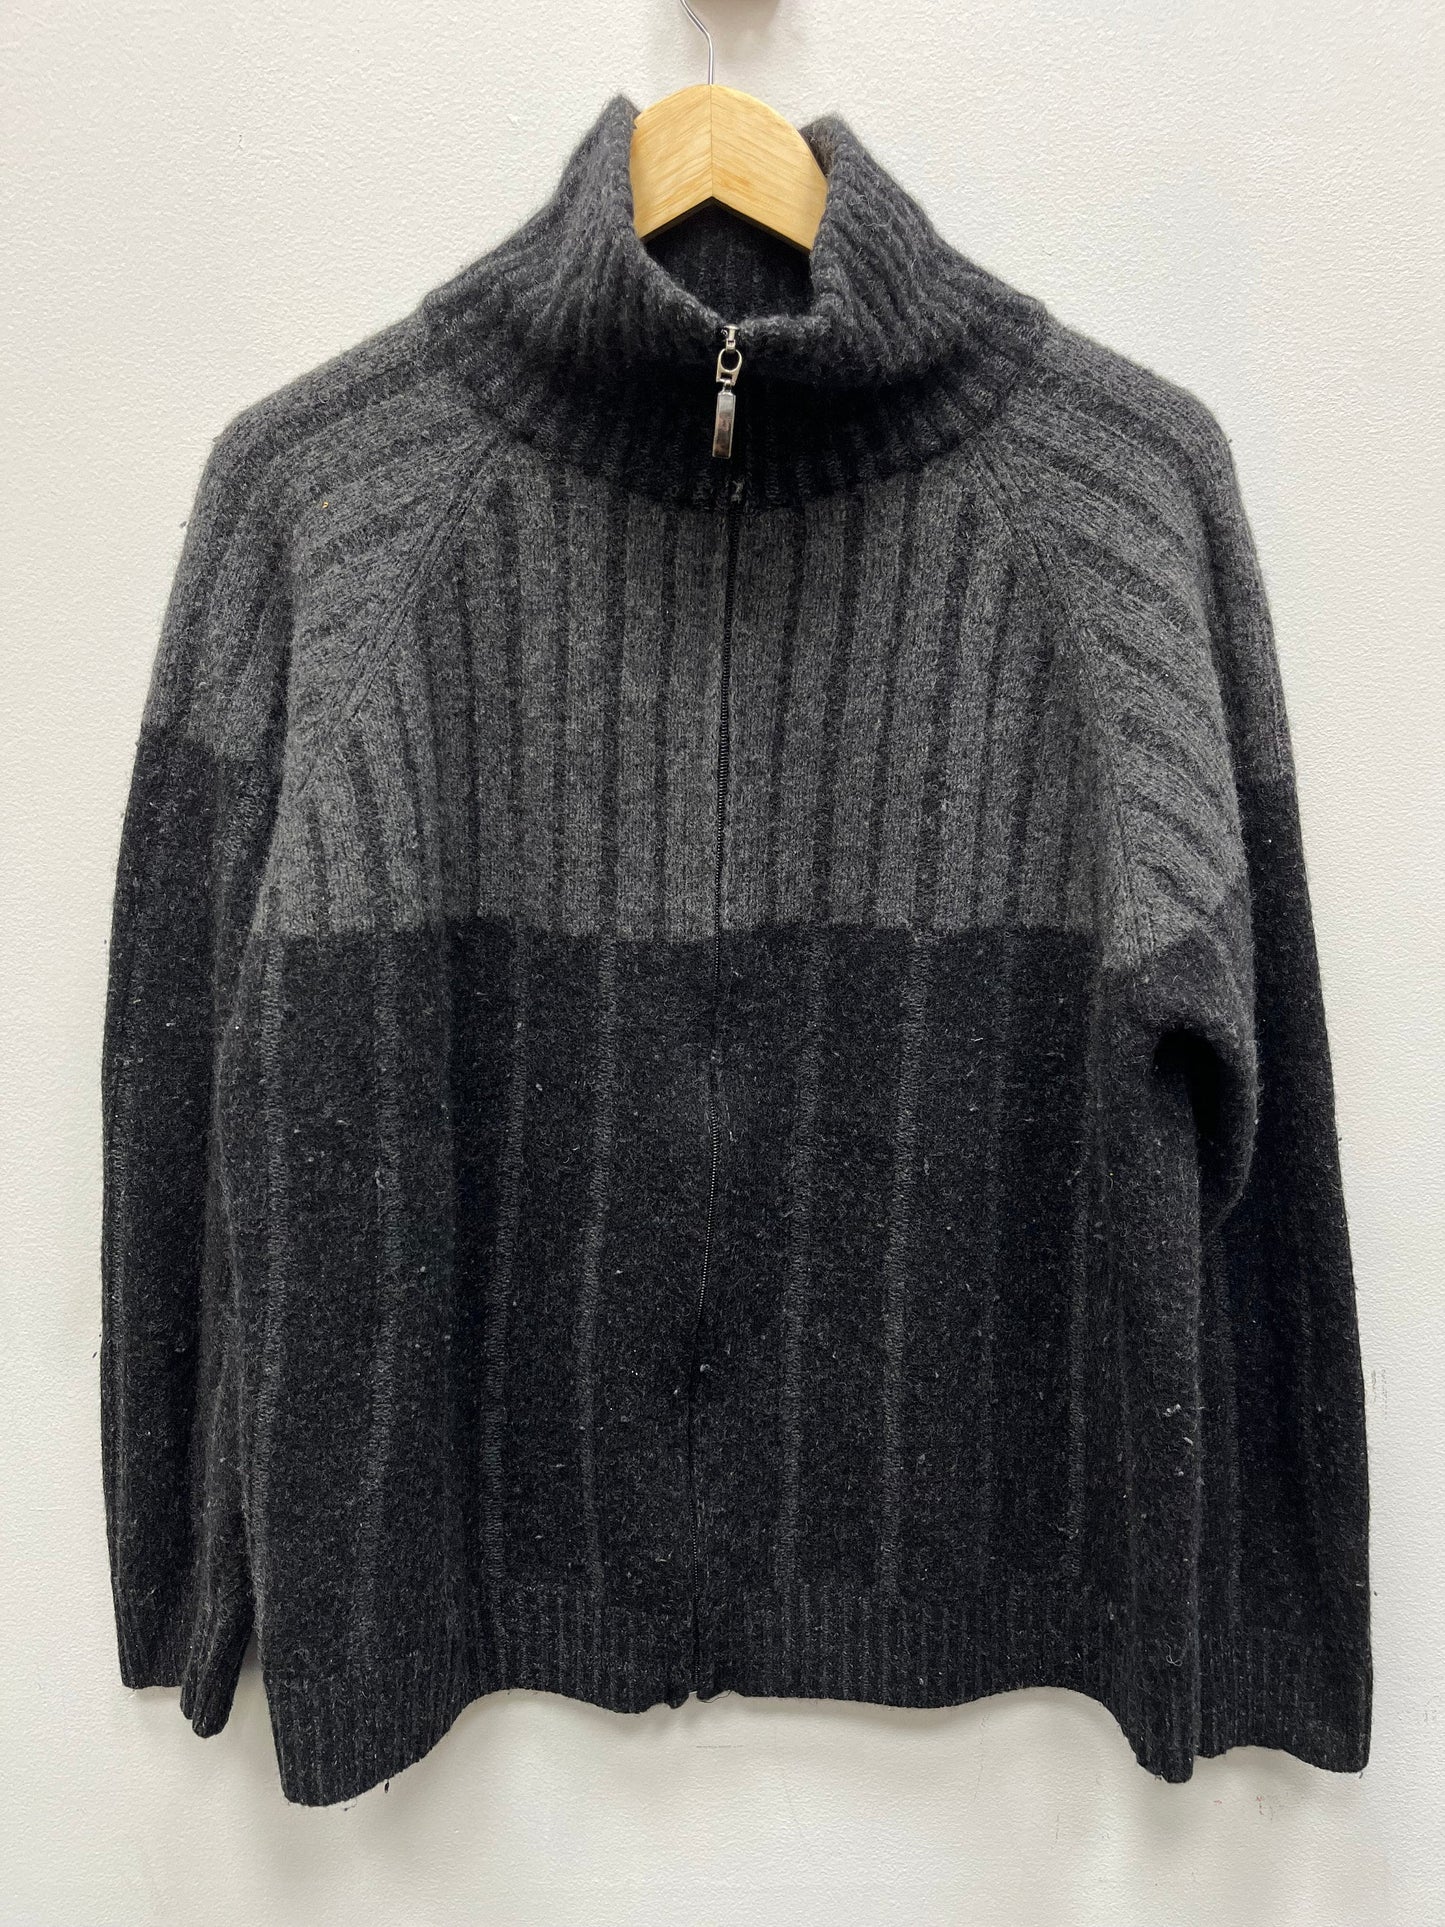 Vintage 1990’s Italian Made Dark Wool Zip Up Sweater